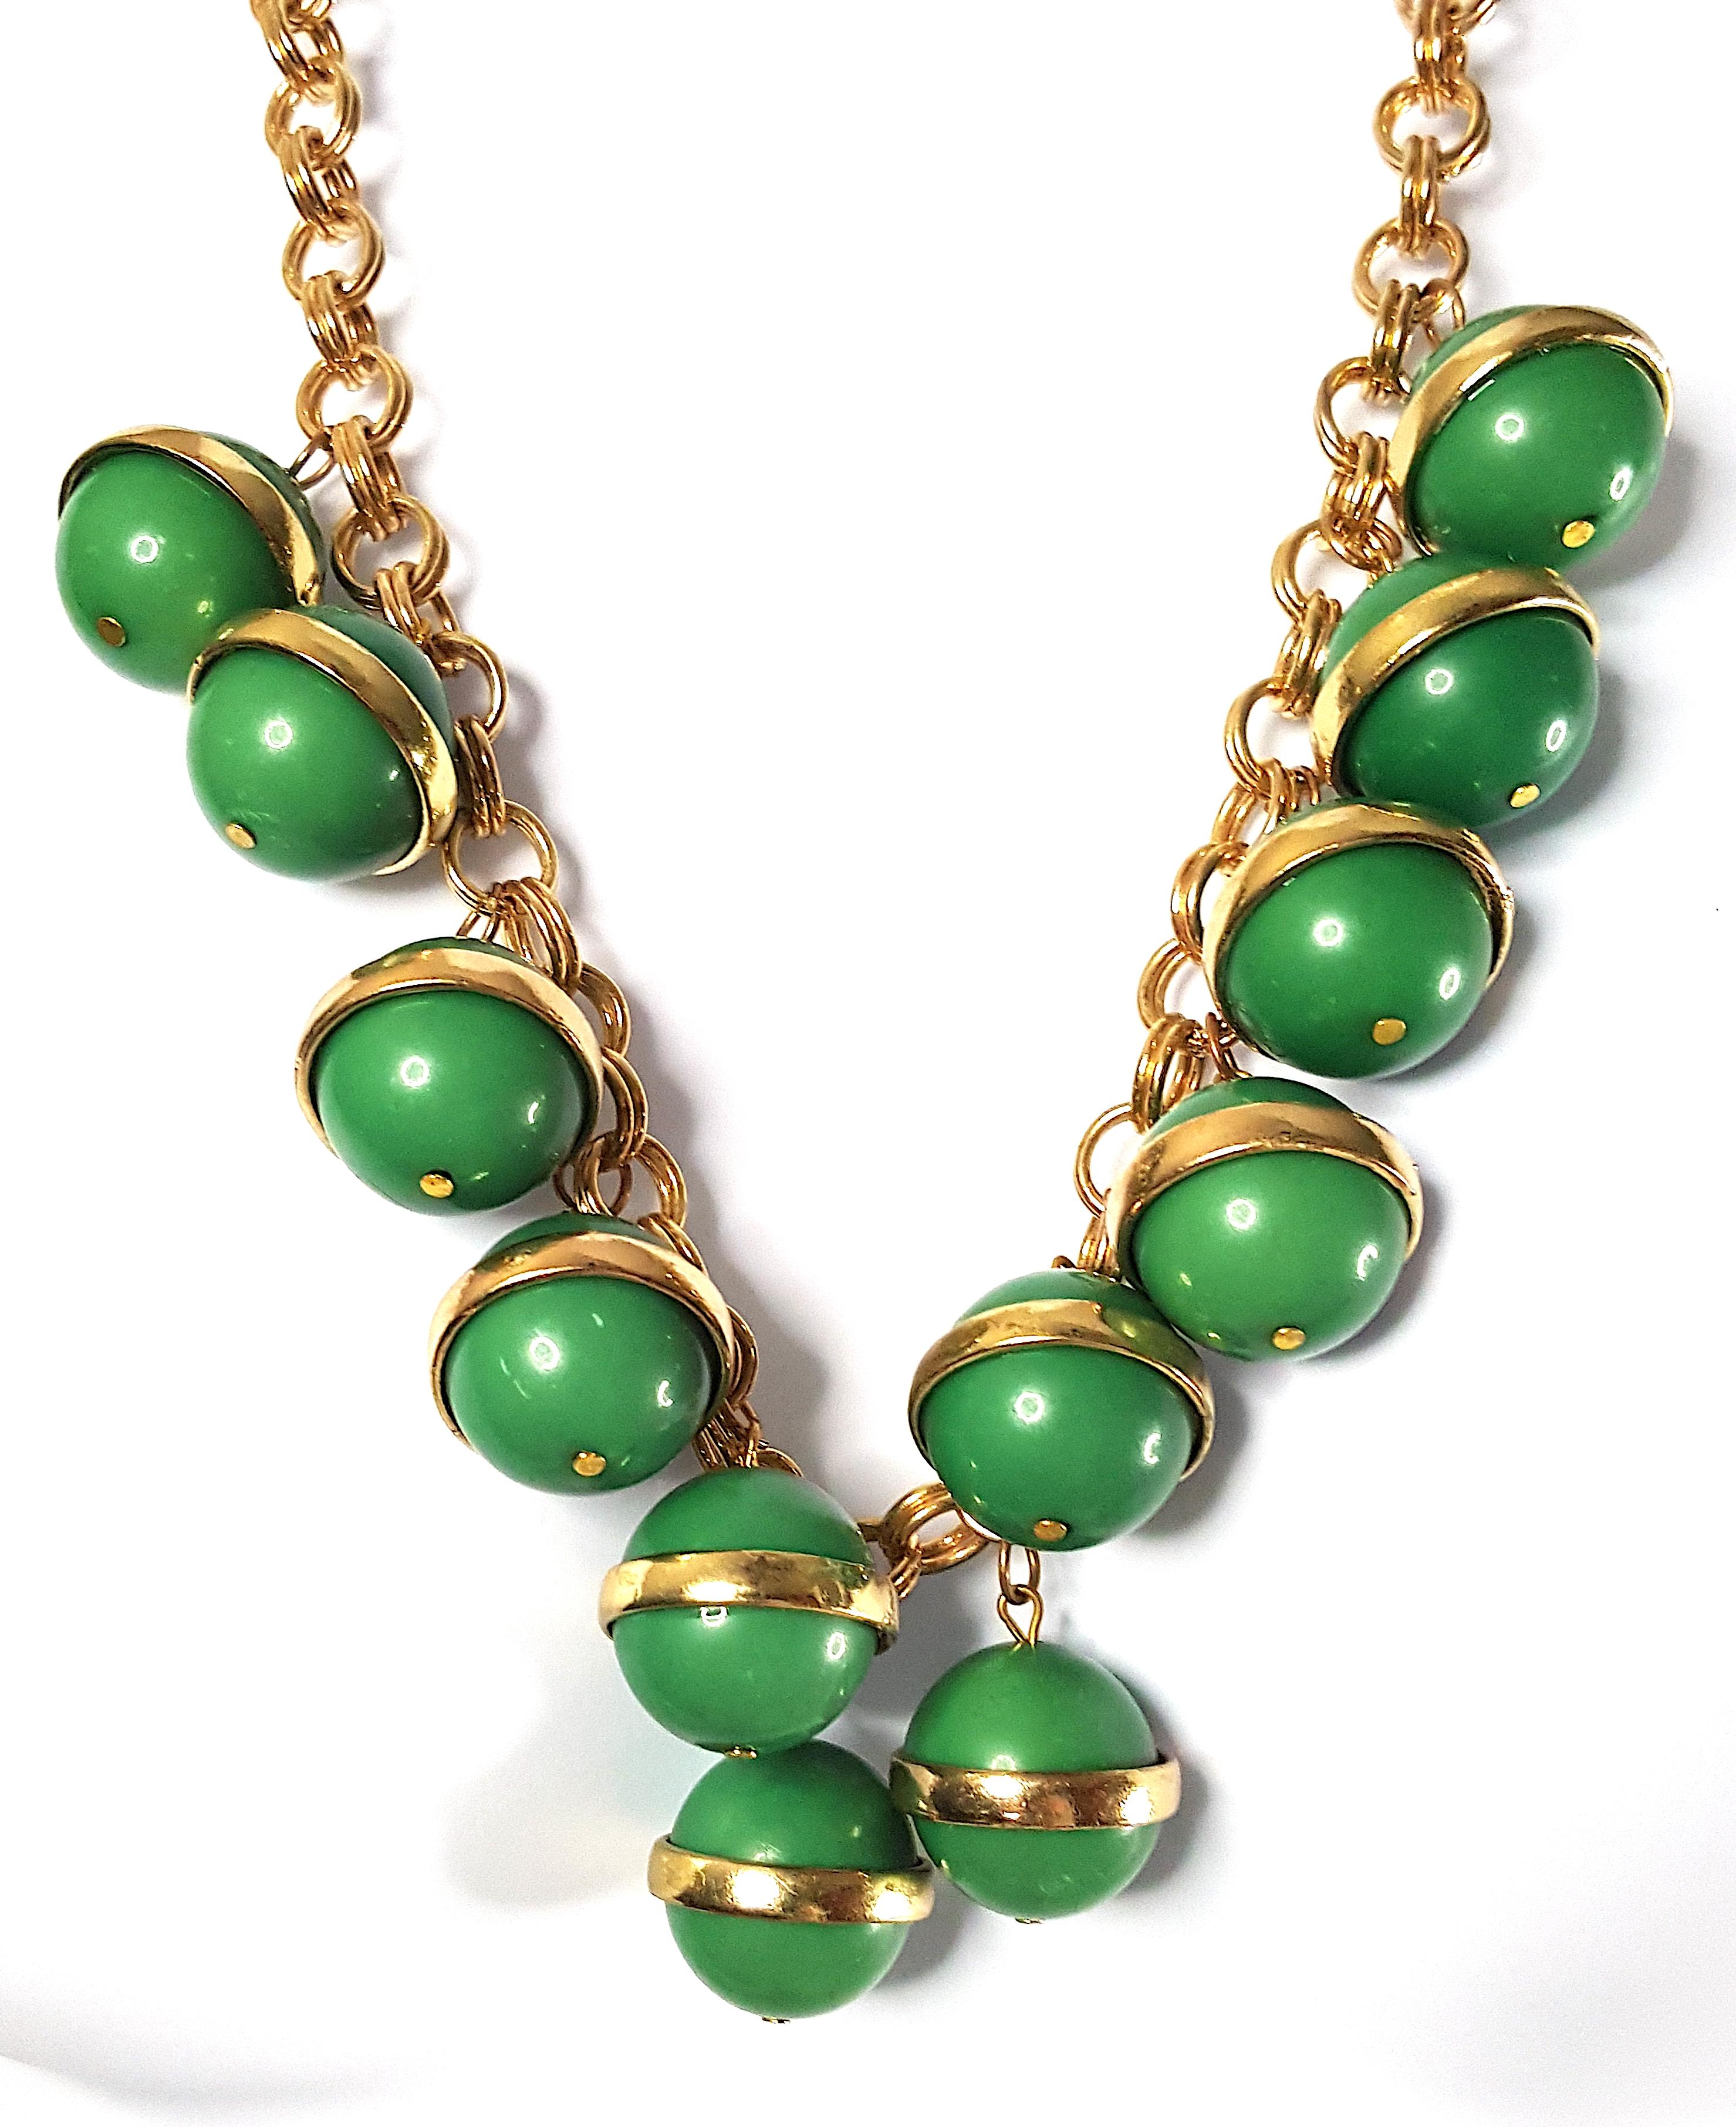 Bakelite 1930s German ArtDeco GoldRinged EmeraldBallPendants ChainLink Necklace For Sale 6